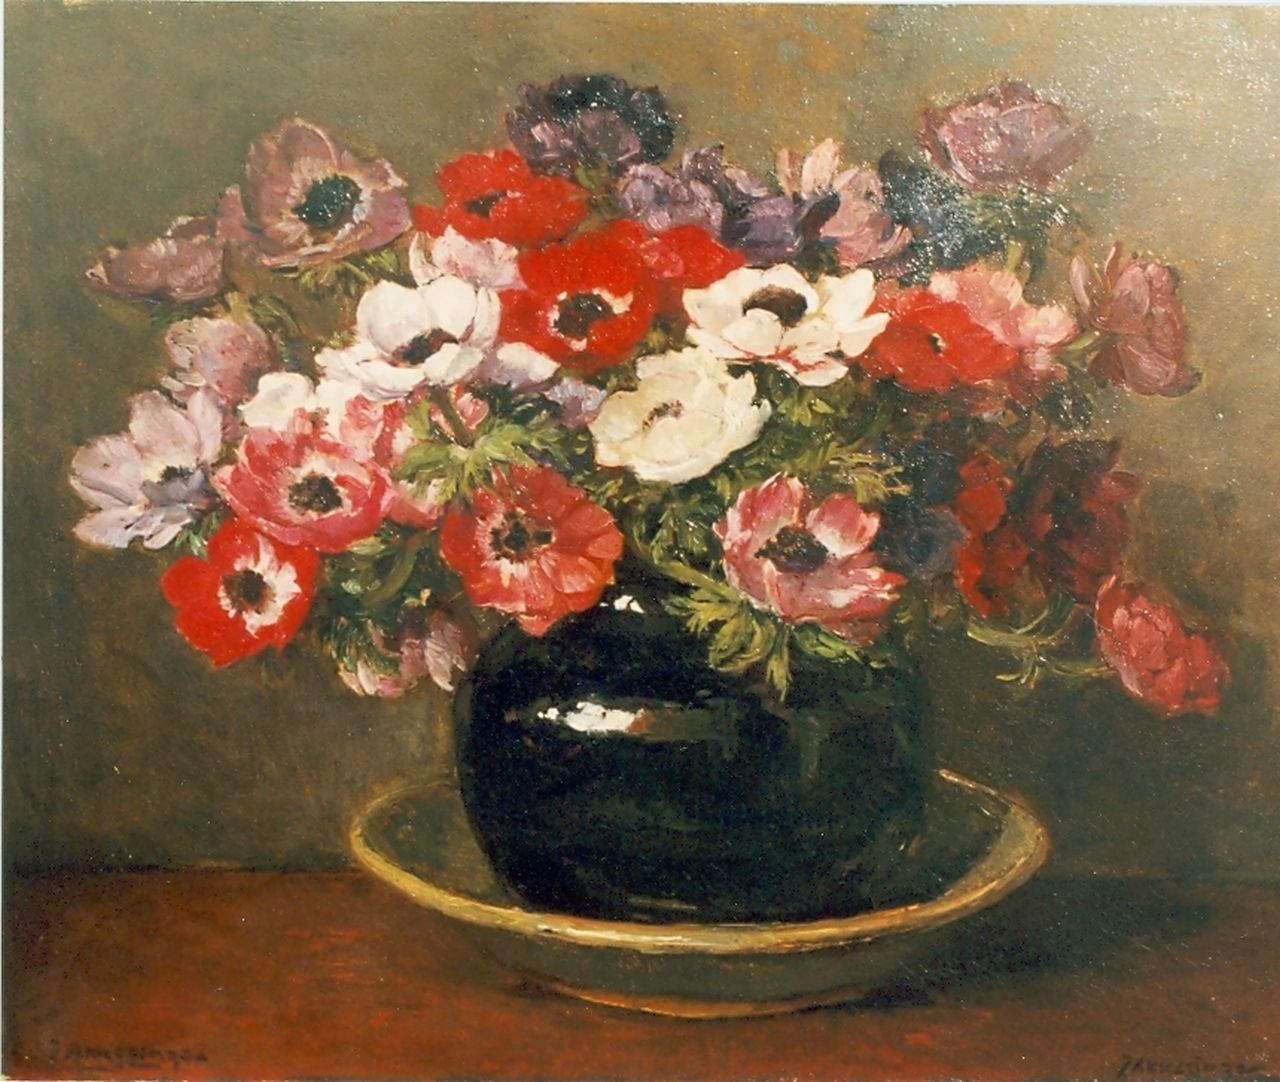 Akkeringa J.E.H.  | 'Johannes Evert' Hendrik Akkeringa, Flowers in a jar, oil on canvas 41.7 x 51.4 cm, signed l.r.